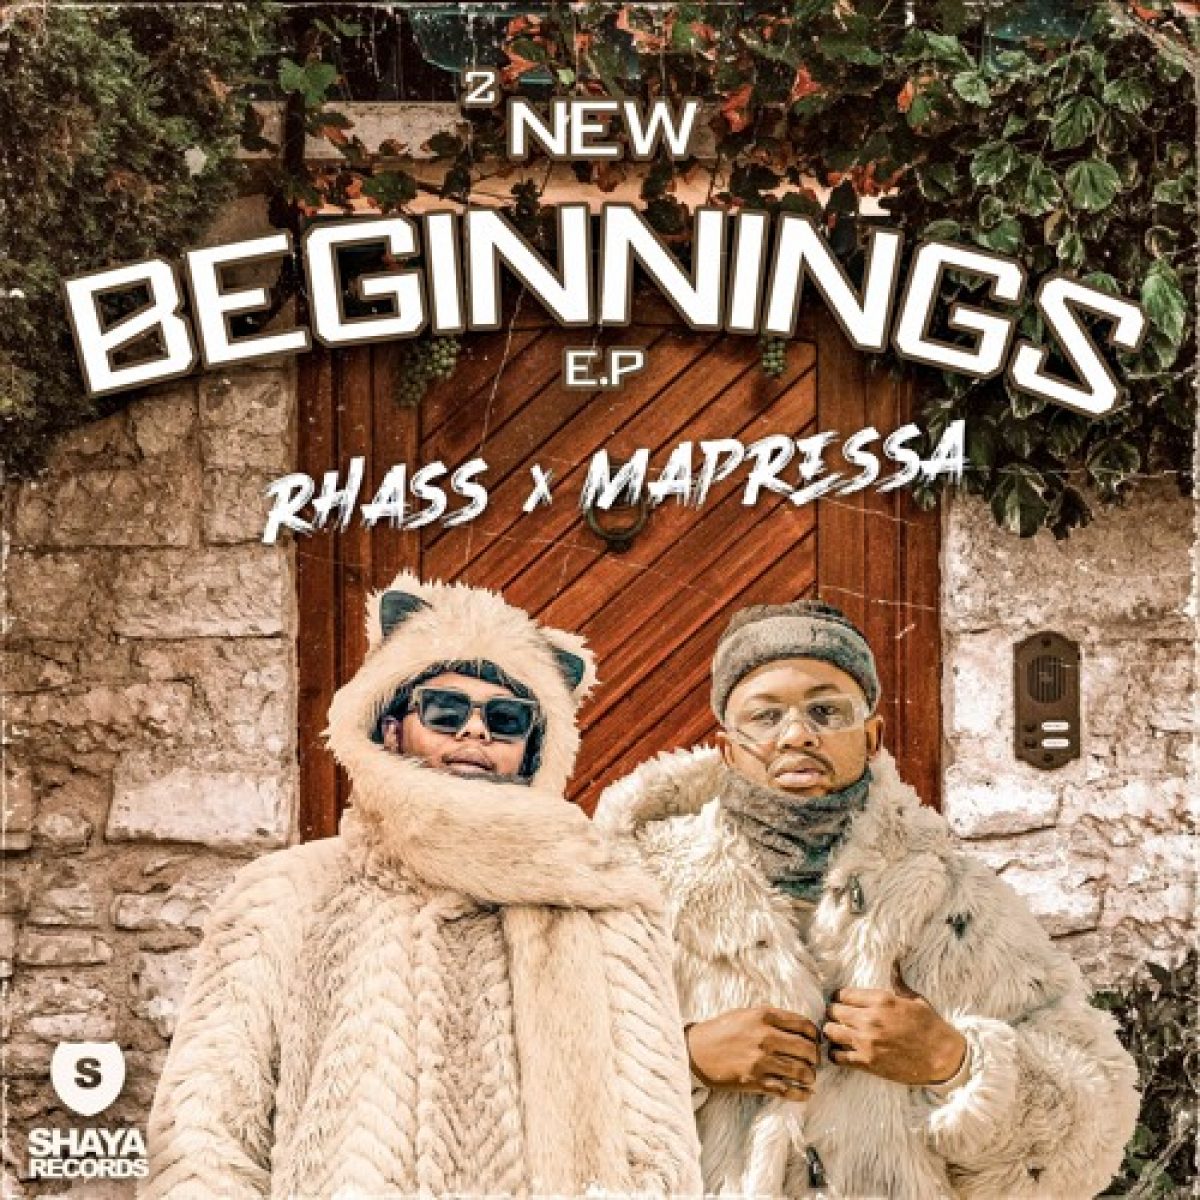 [EP] Rhass & Mapressa – 2 New Beginnings mp3 download